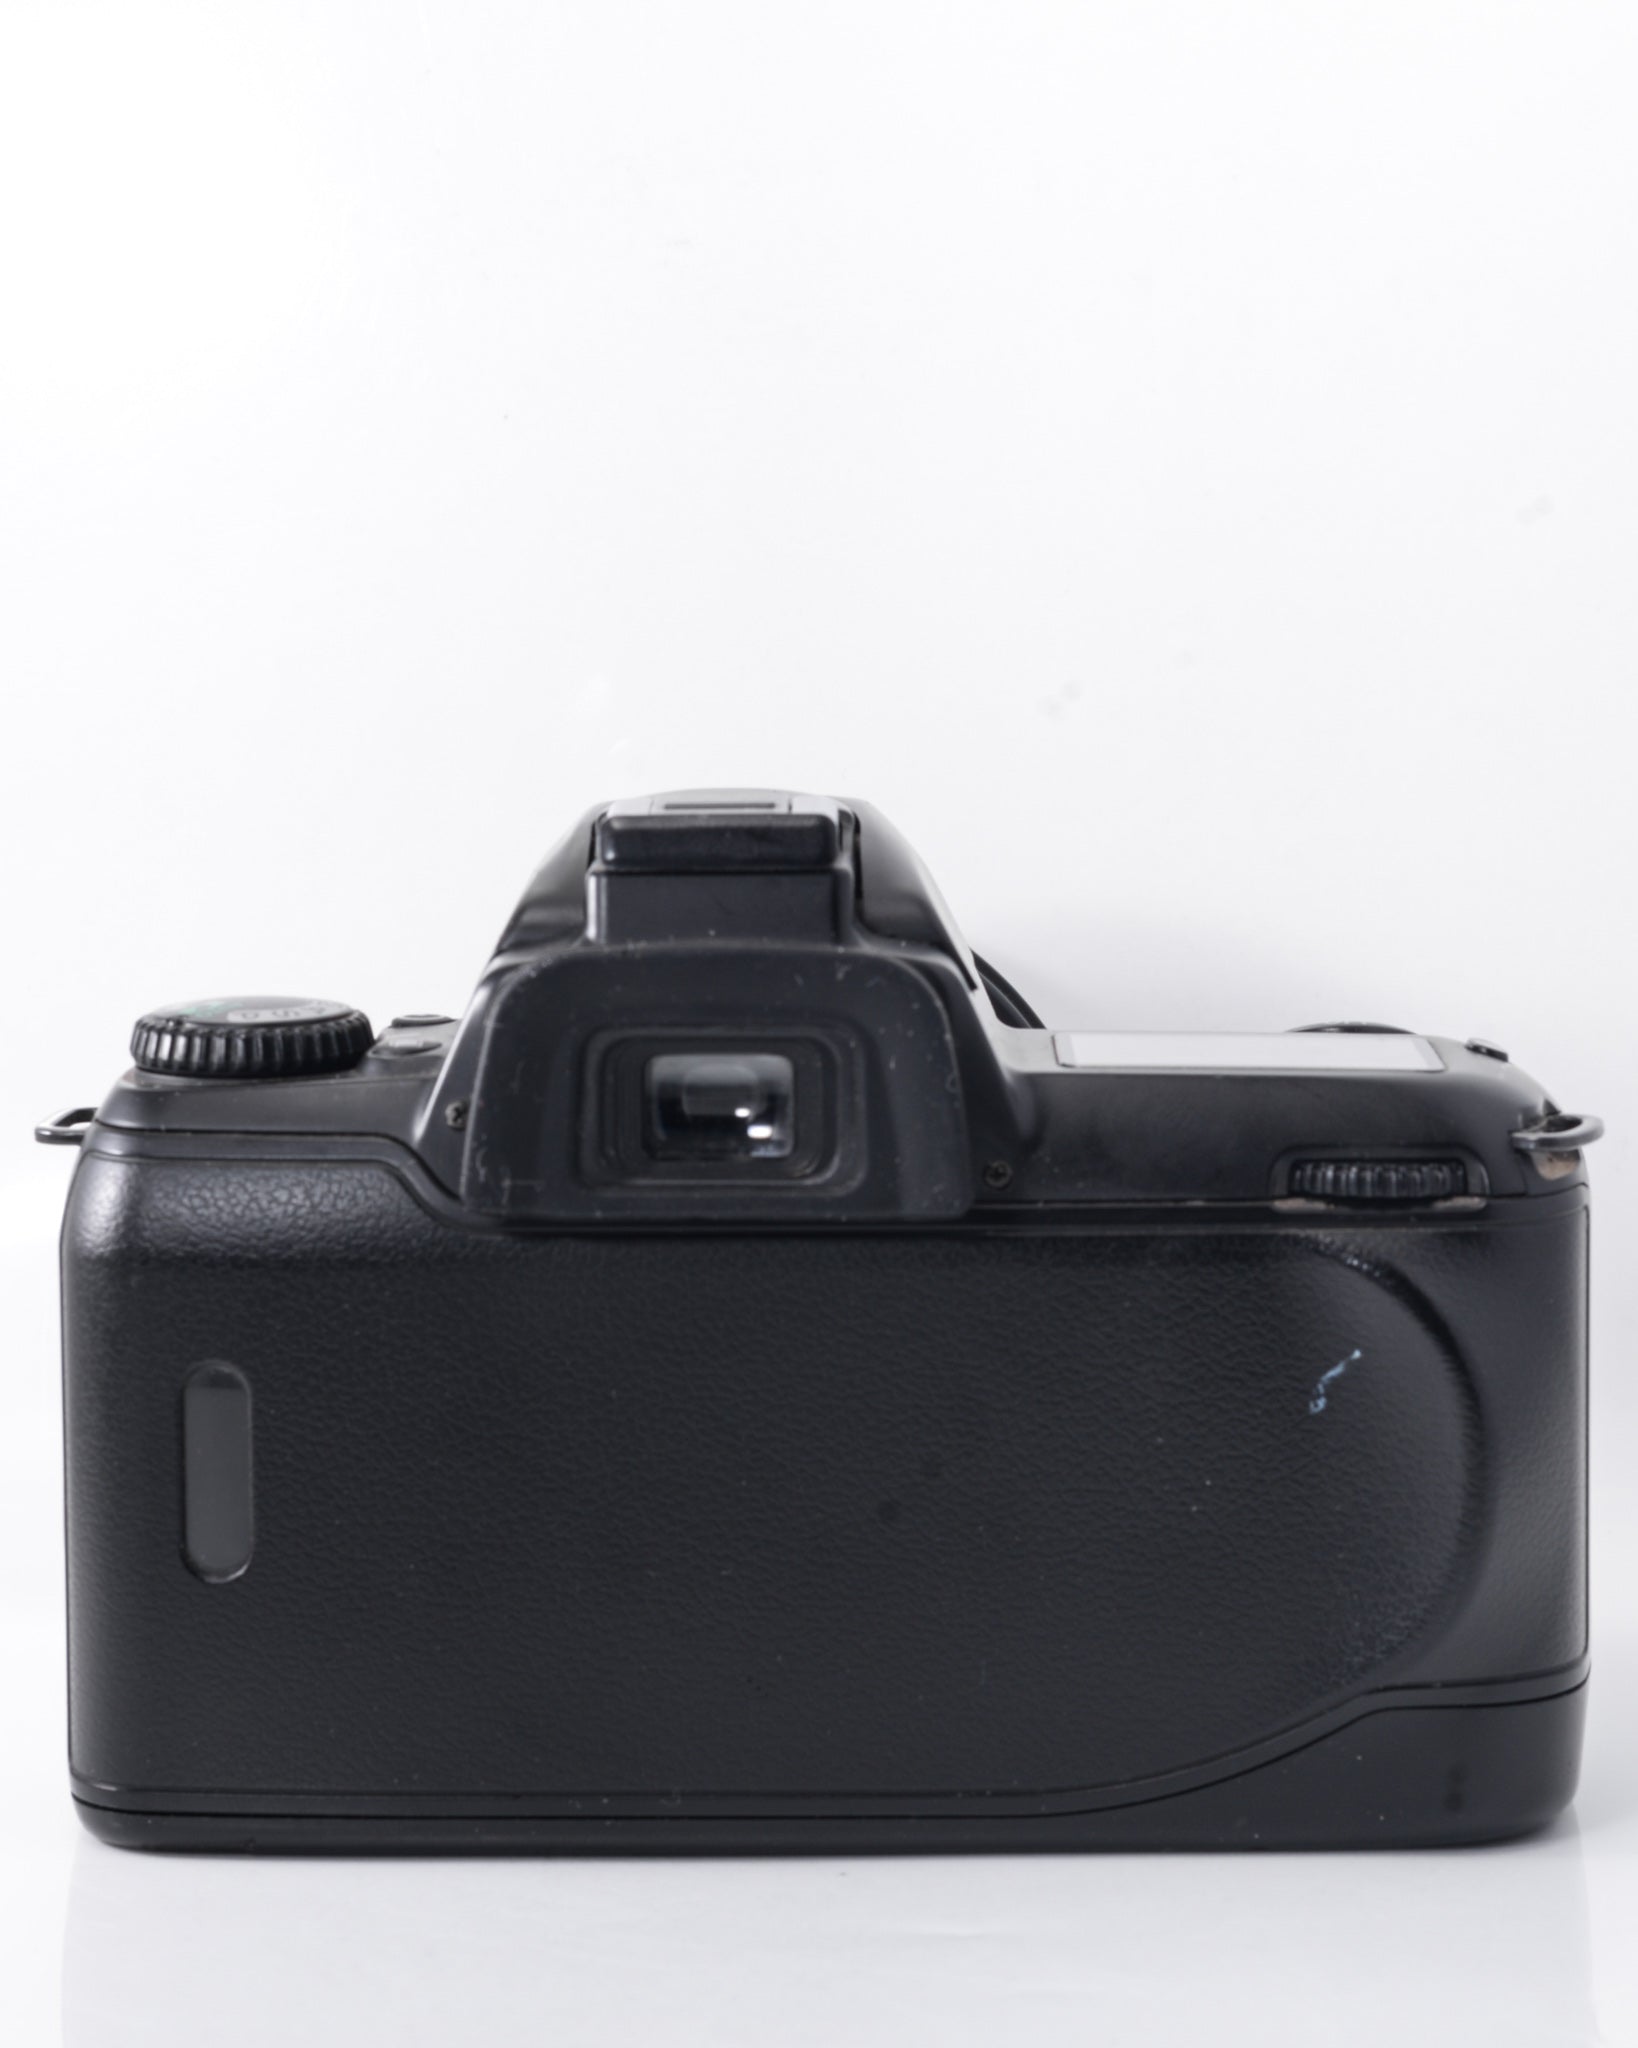 Nikon F65 35mm SLR film camera with 28-105mm lens